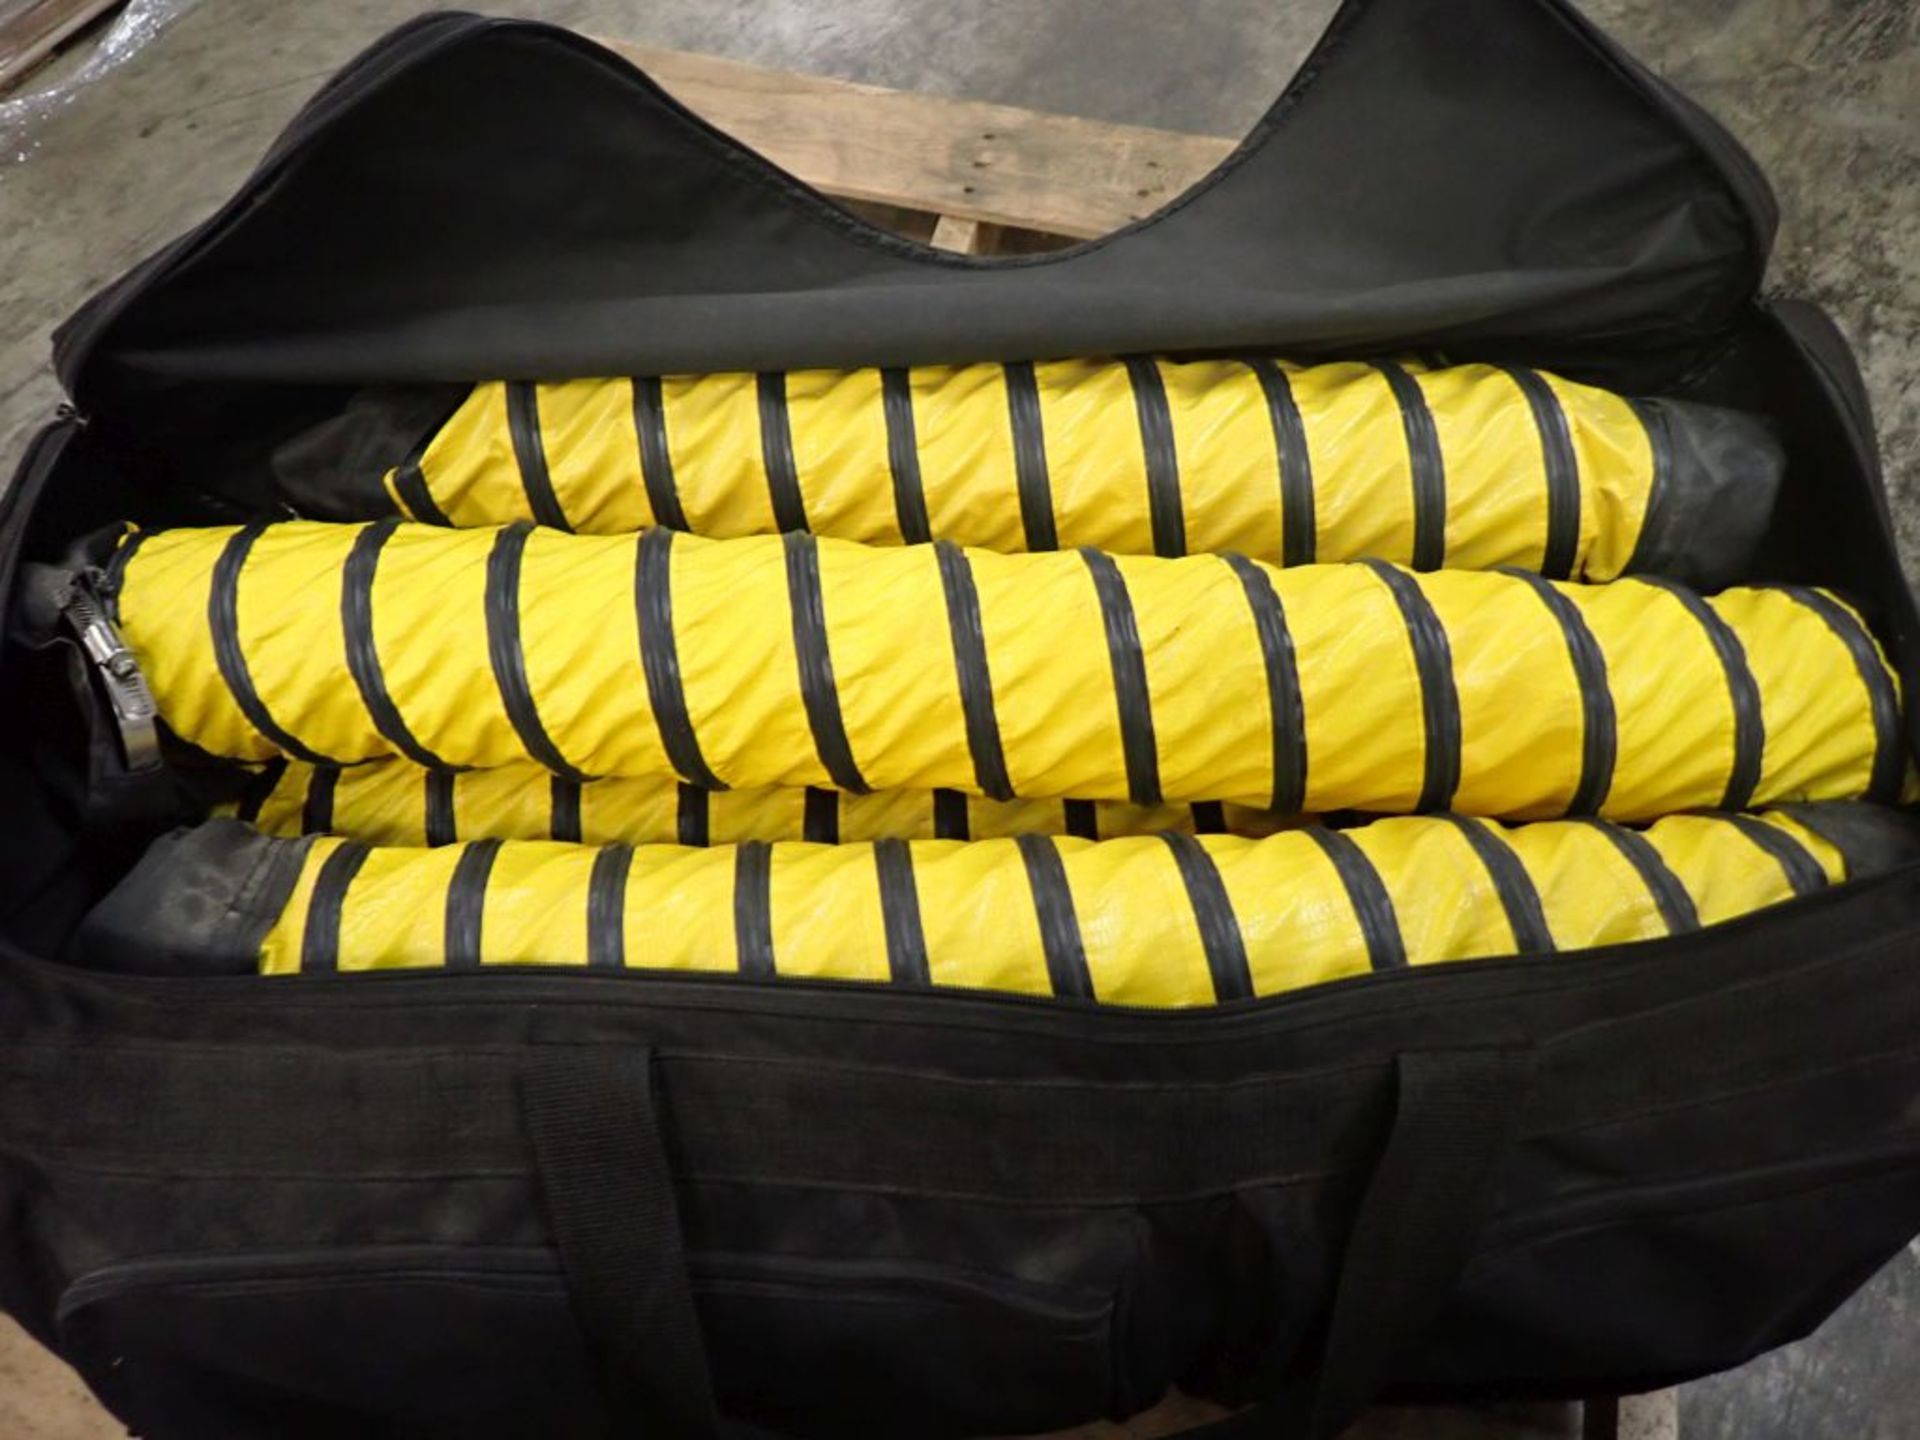 Drieaze Portable Duffle Bag - Image 3 of 5